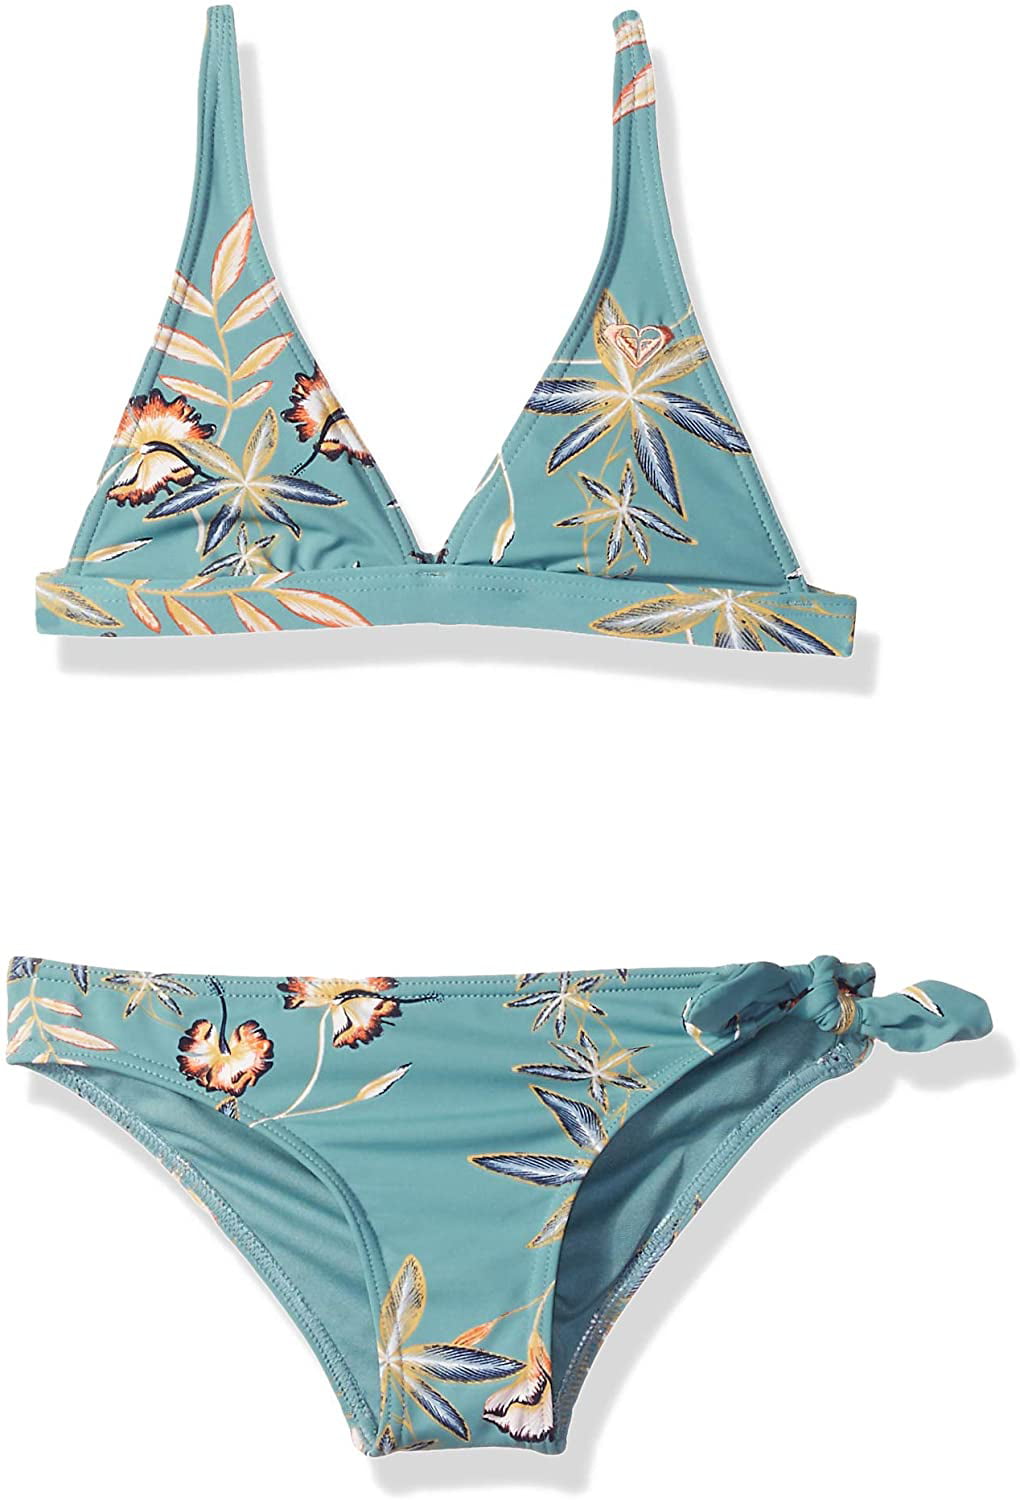 Roxy - Girls Swimwear Born in Waves Two Piece Bikini Set 12 - Walmart